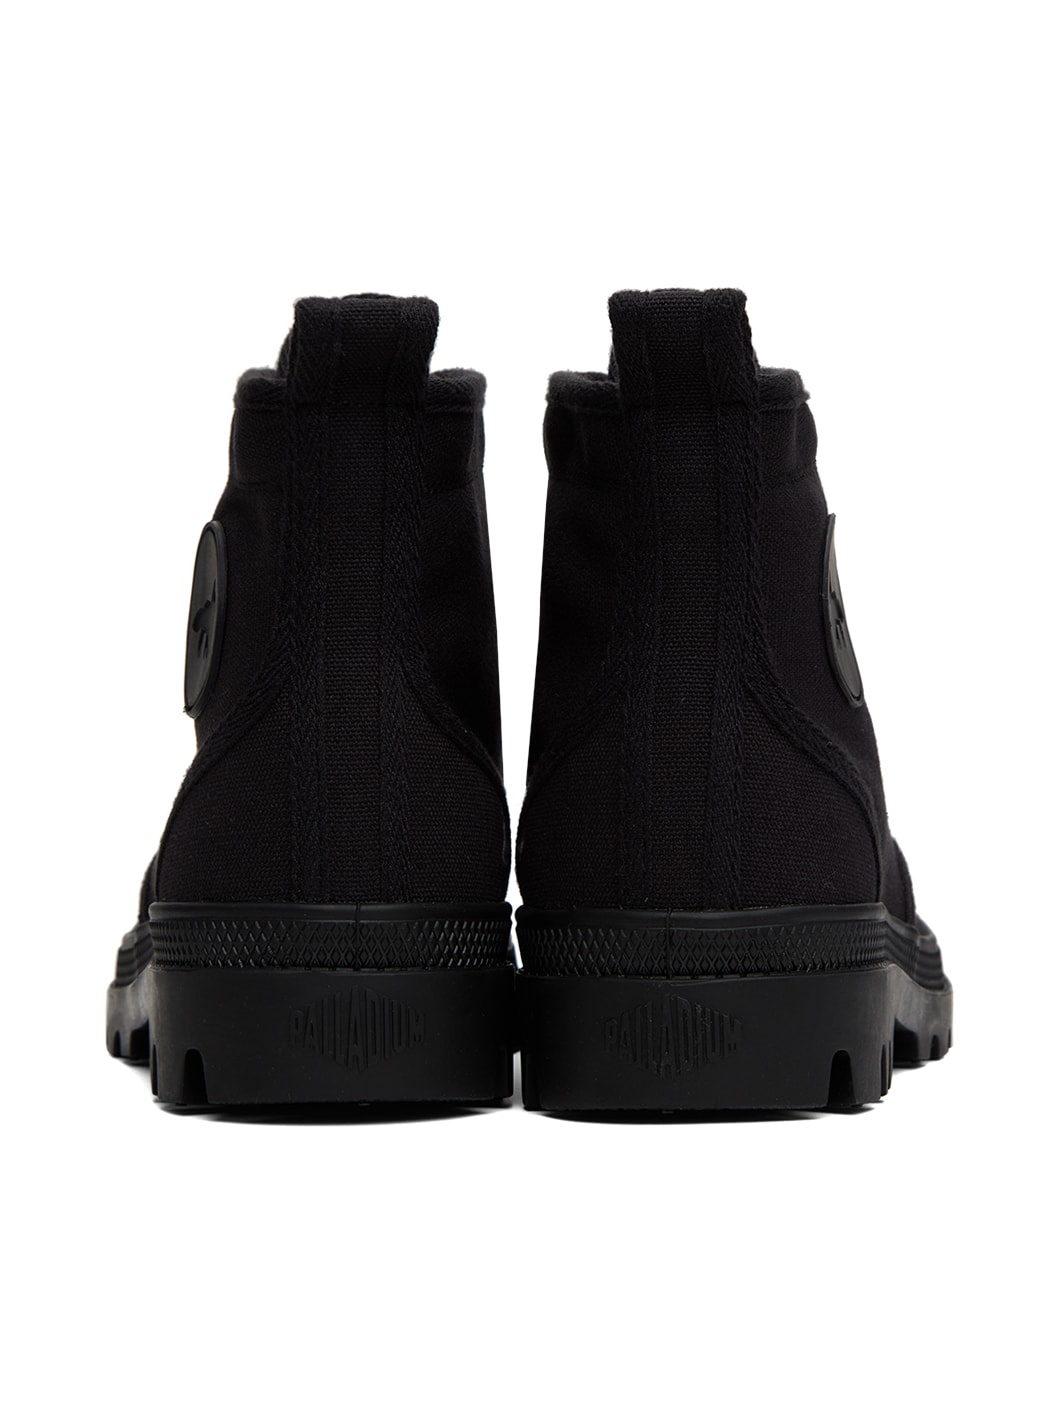 Black Palladium Edition Boots - 2